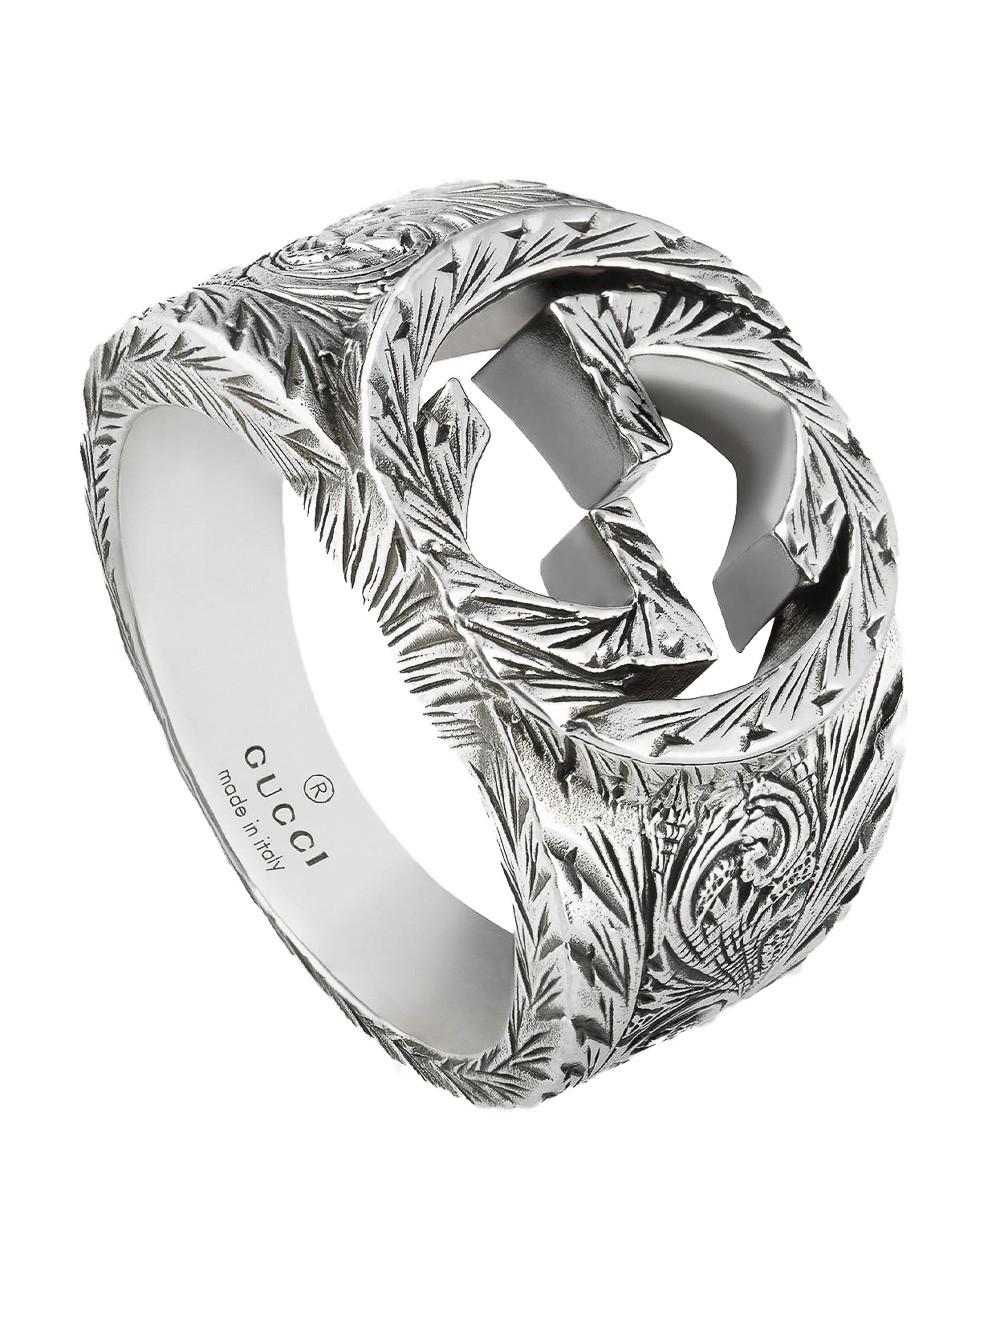 Gucci Interlocking G Ring in Metallic for Men - Lyst